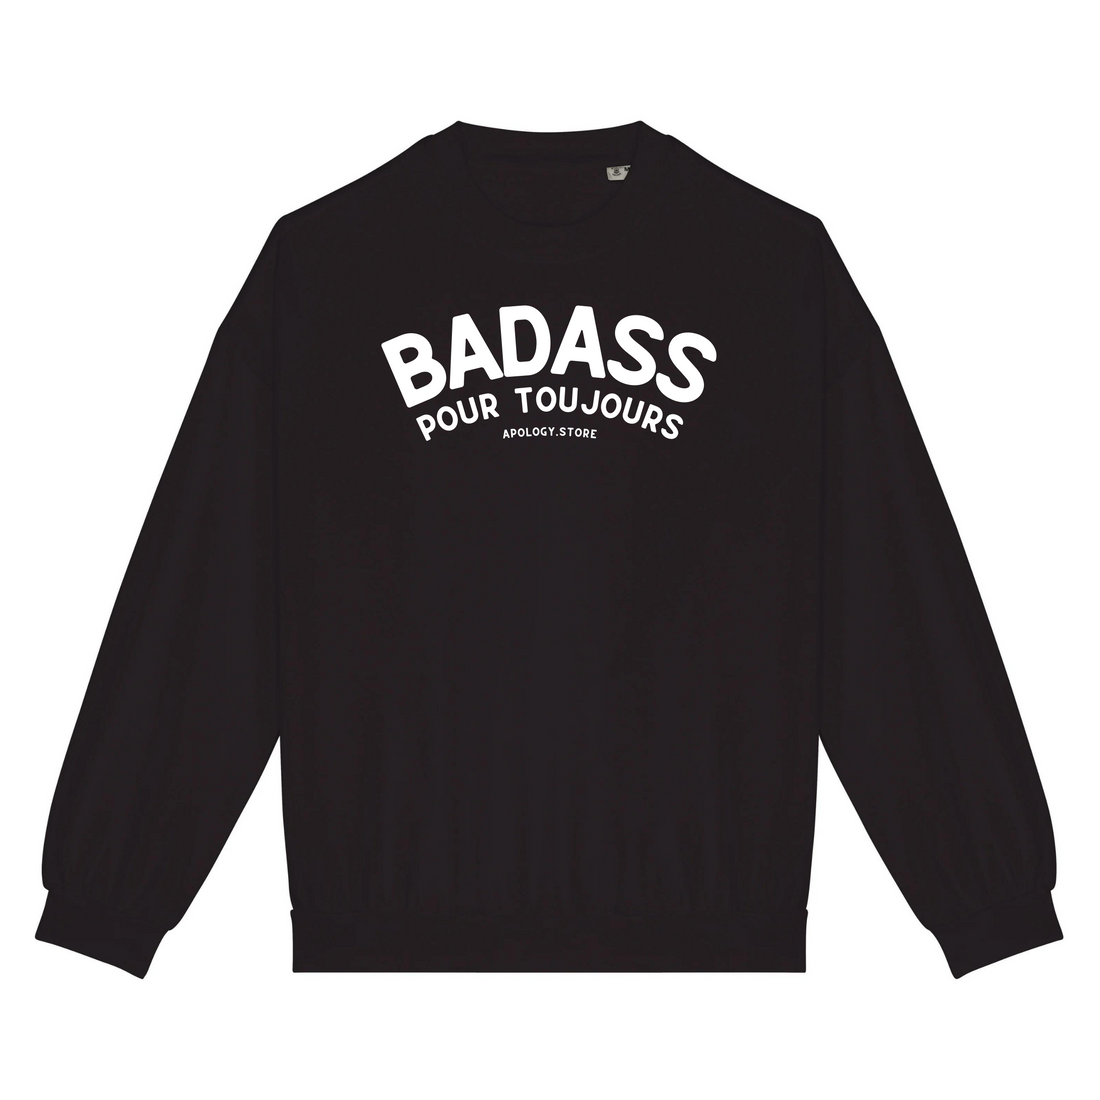 Badass Forever Sweatshirt - Made in Portugal